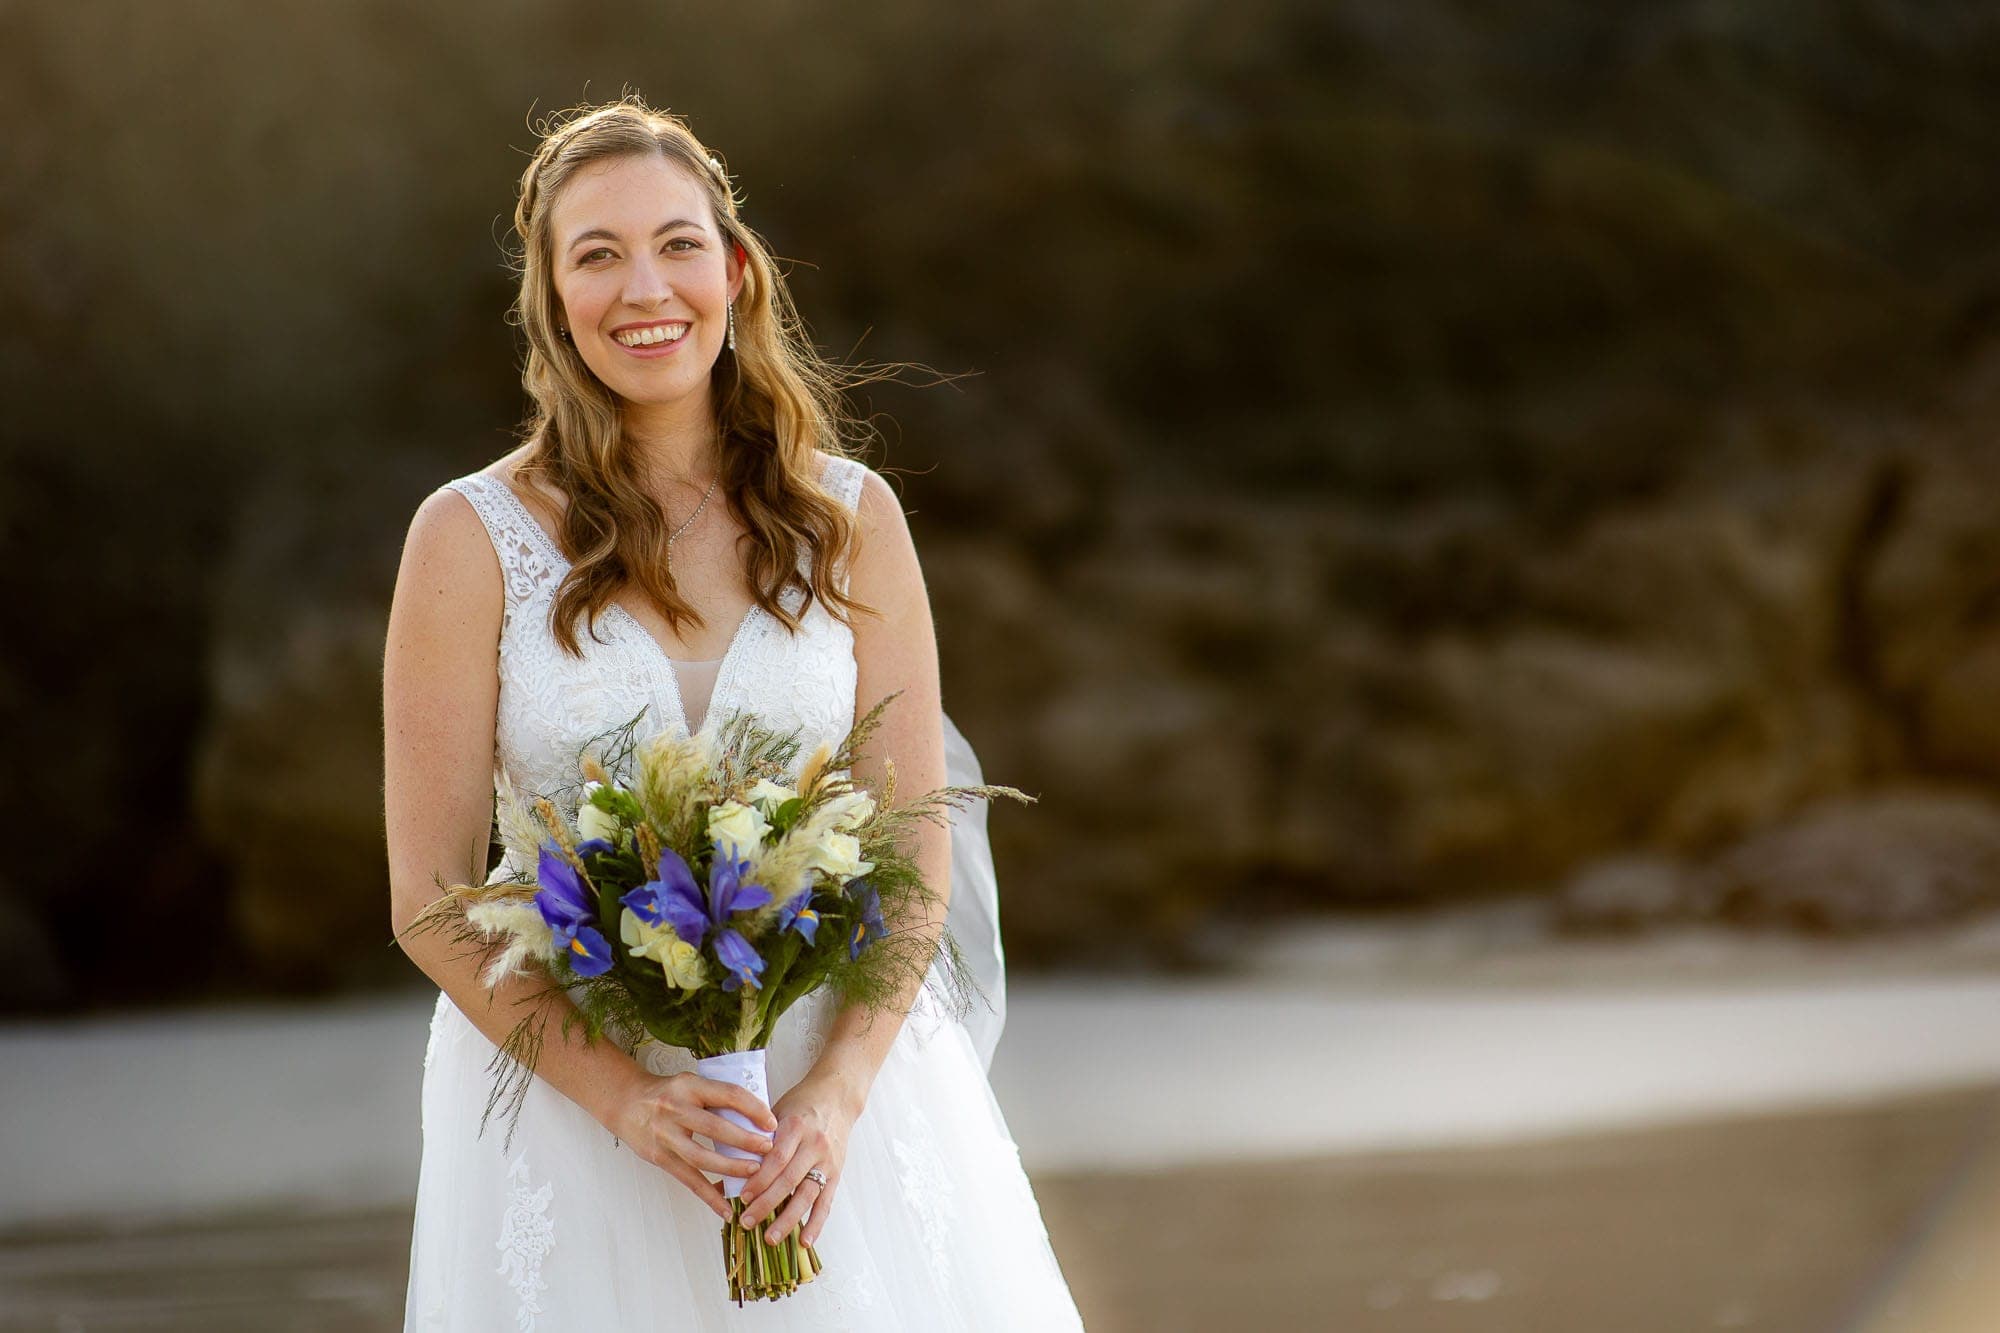 the bride on the beach